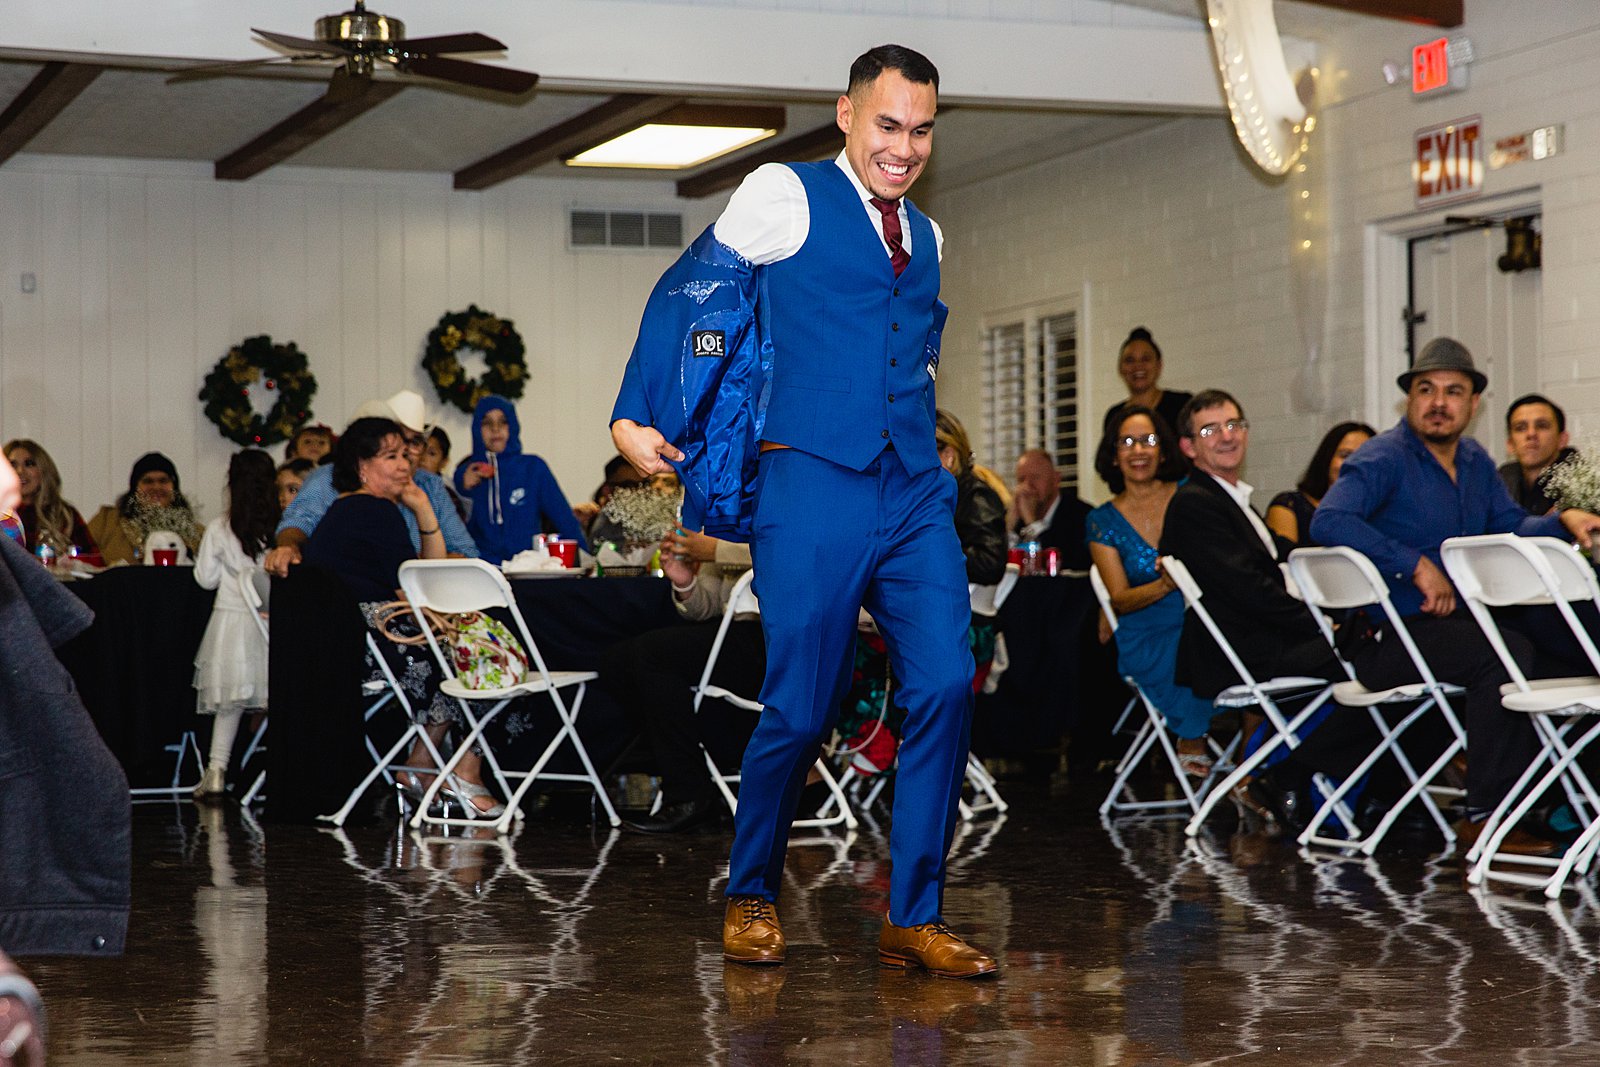 Garter toss at Valley Garden Center wedding reception by Phoenix wedding photographer PMA Photography.